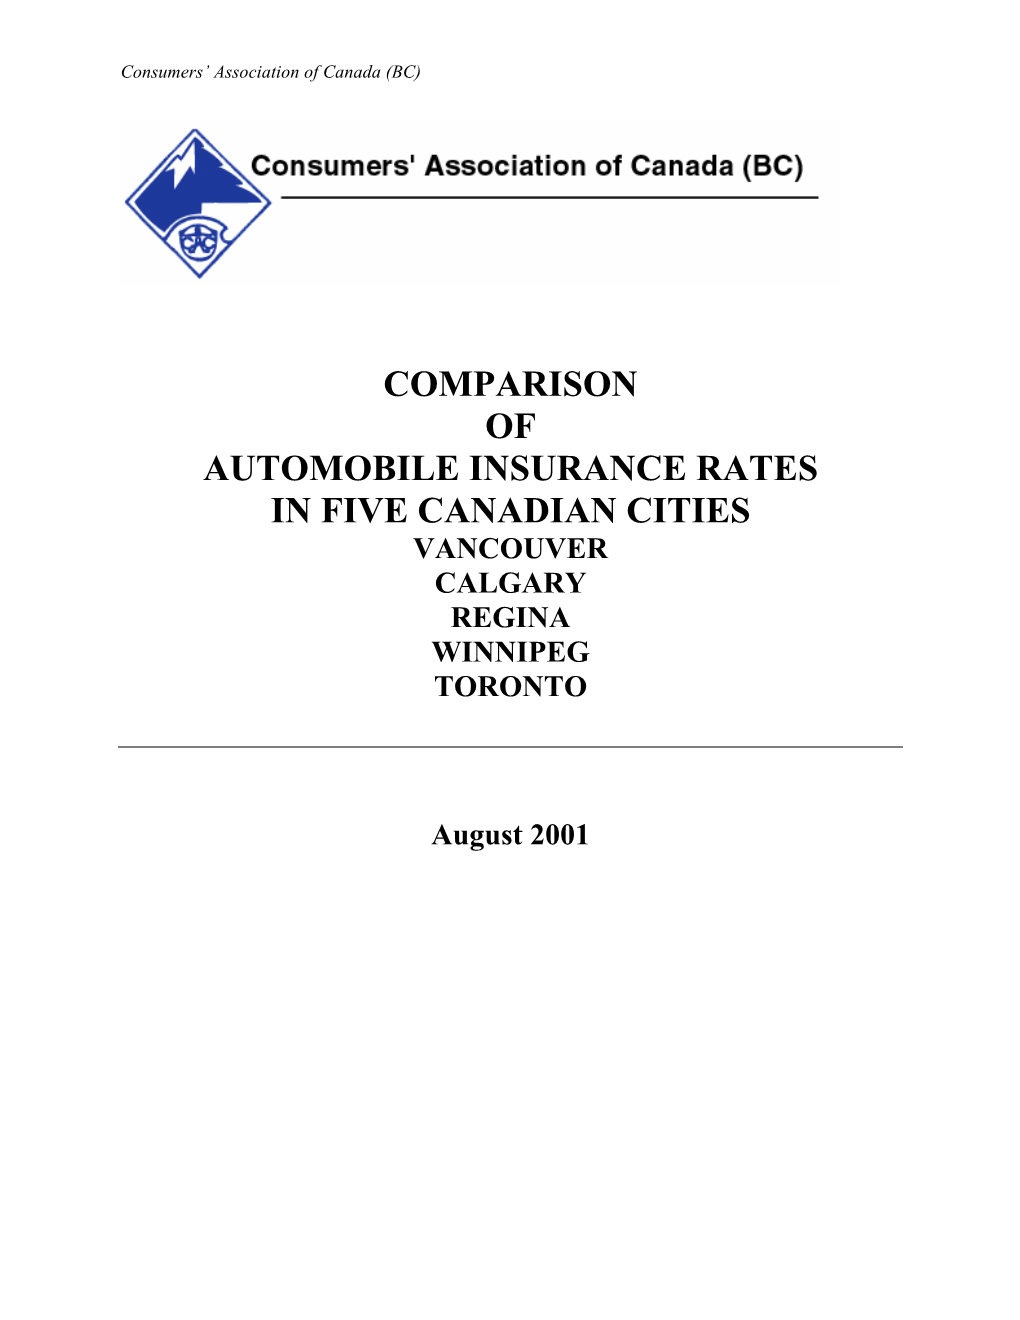 Comparison of Automobile Insurance Rates in Five Canadian Cities Vancouver Calgary Regina Winnipeg Toronto